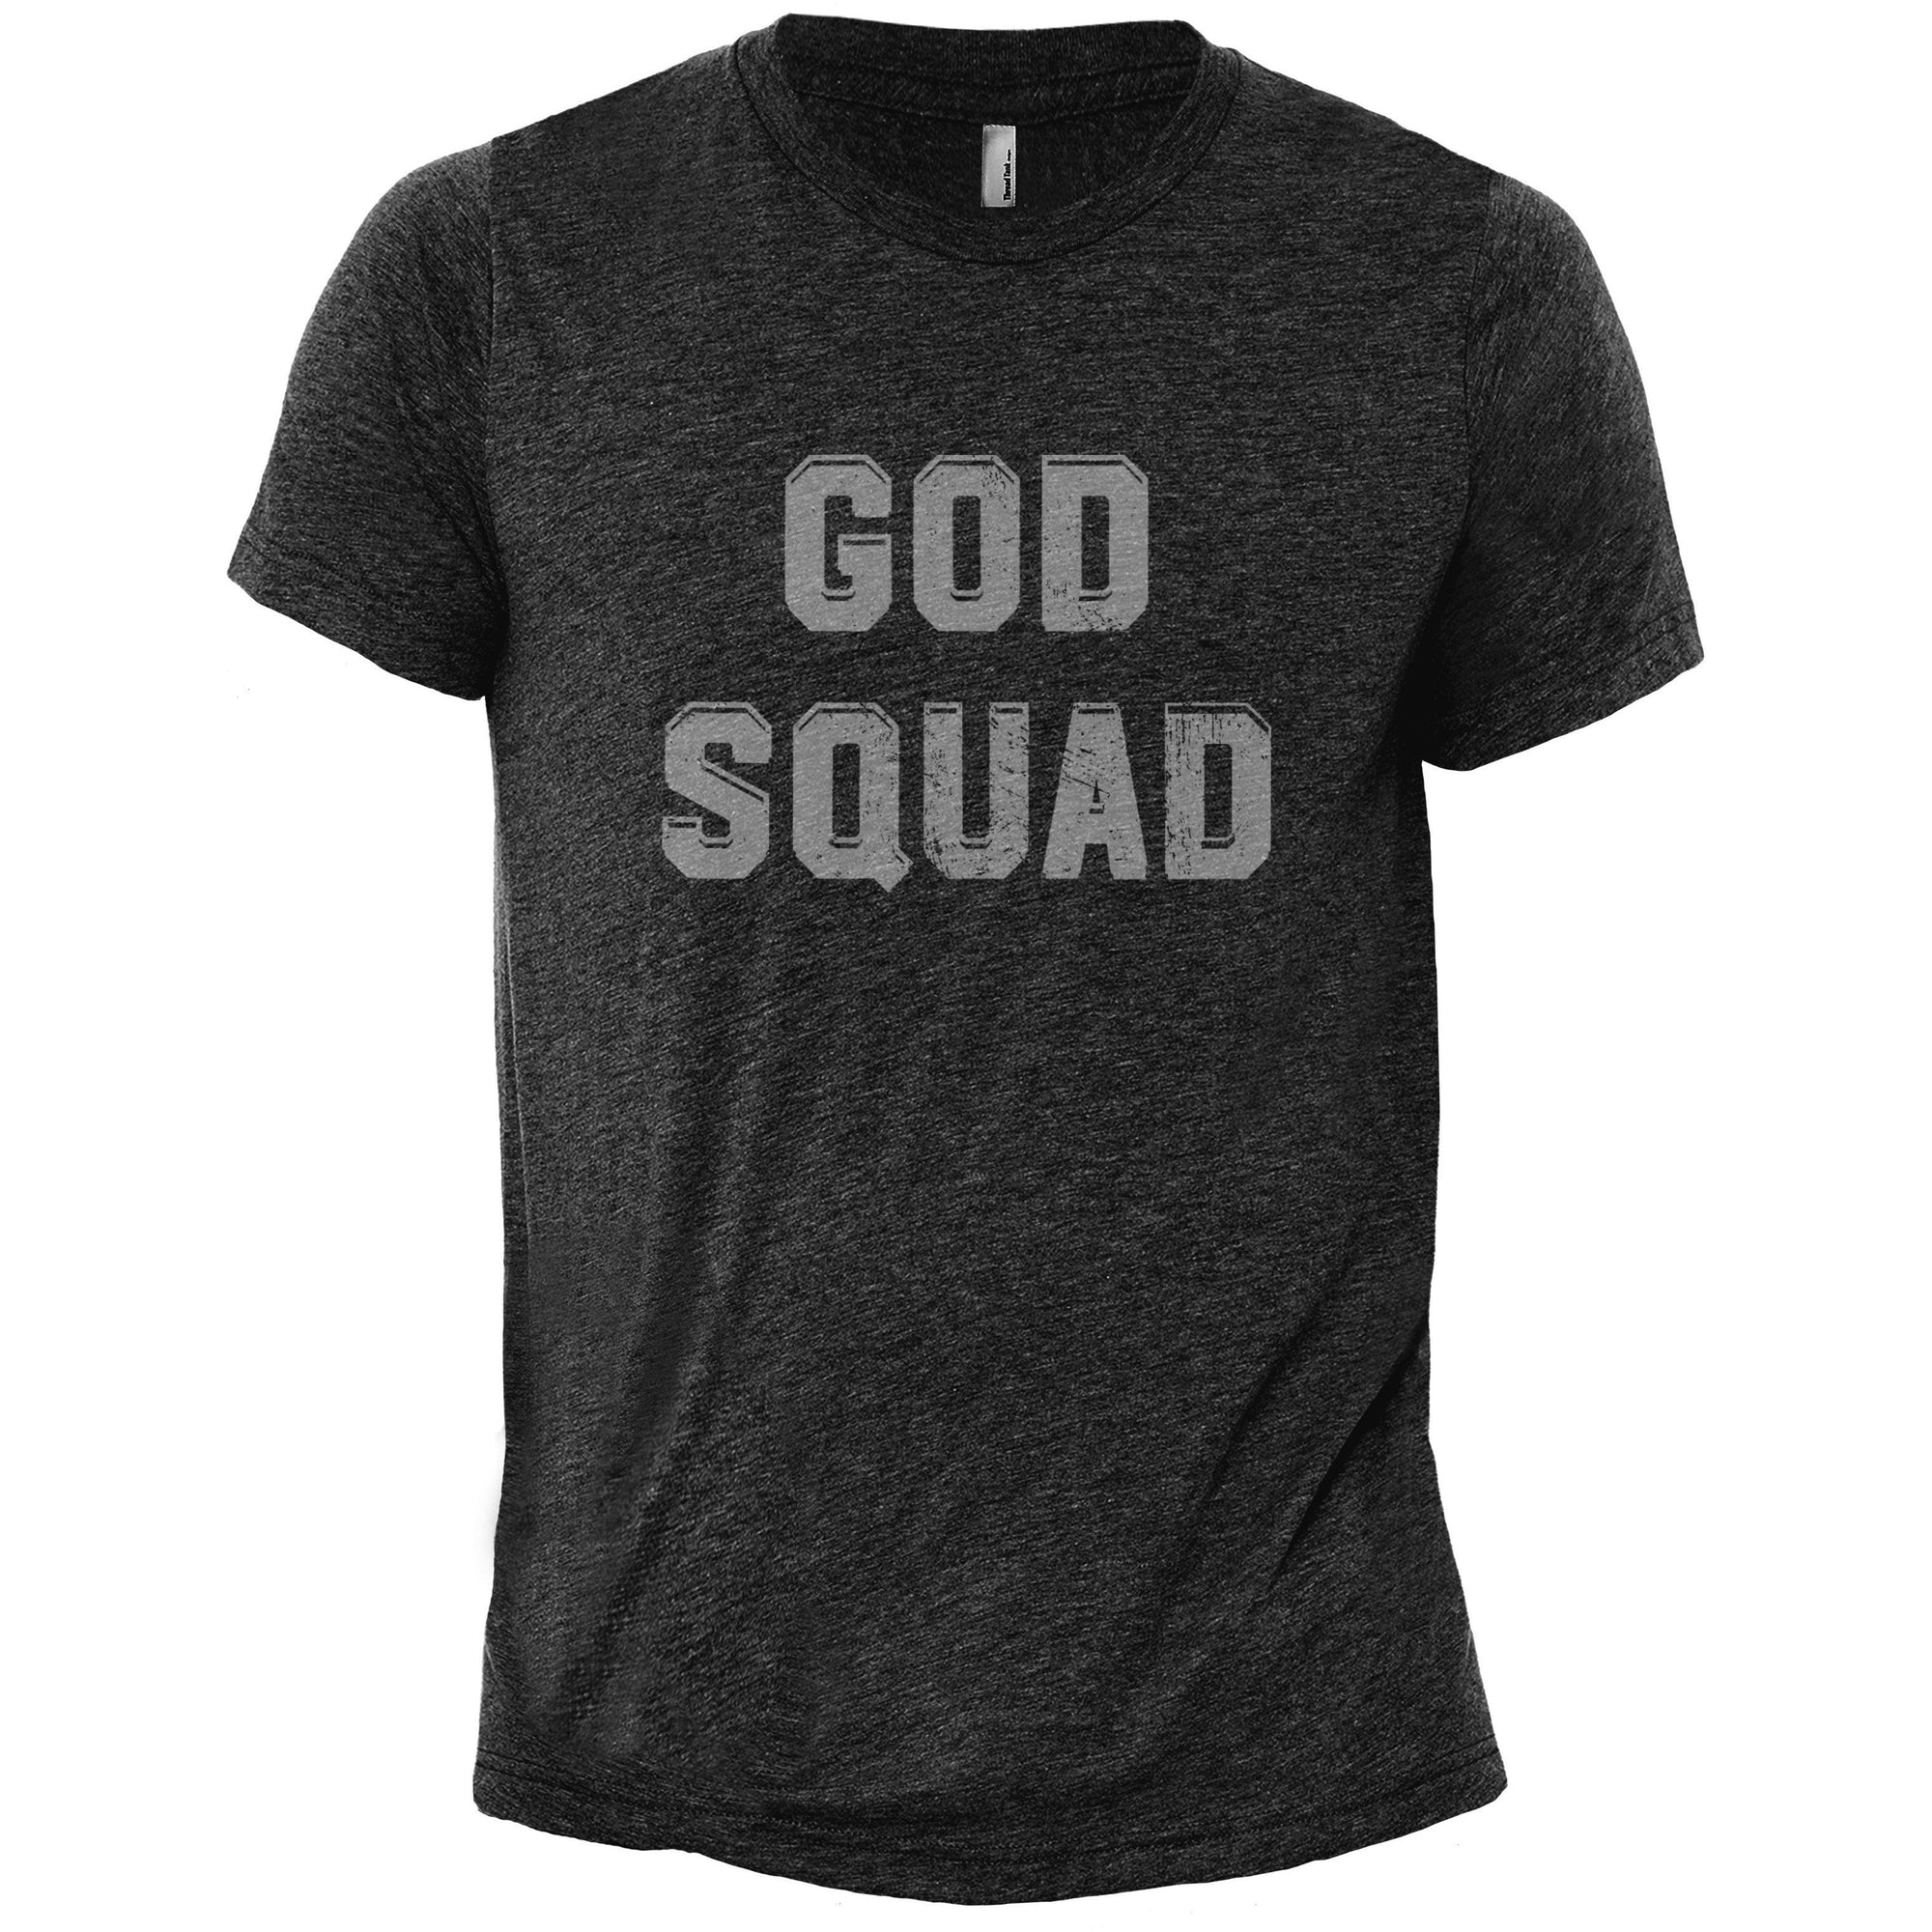 God Squad Charcoal Printed Graphic Men's Crew T-Shirt Tee